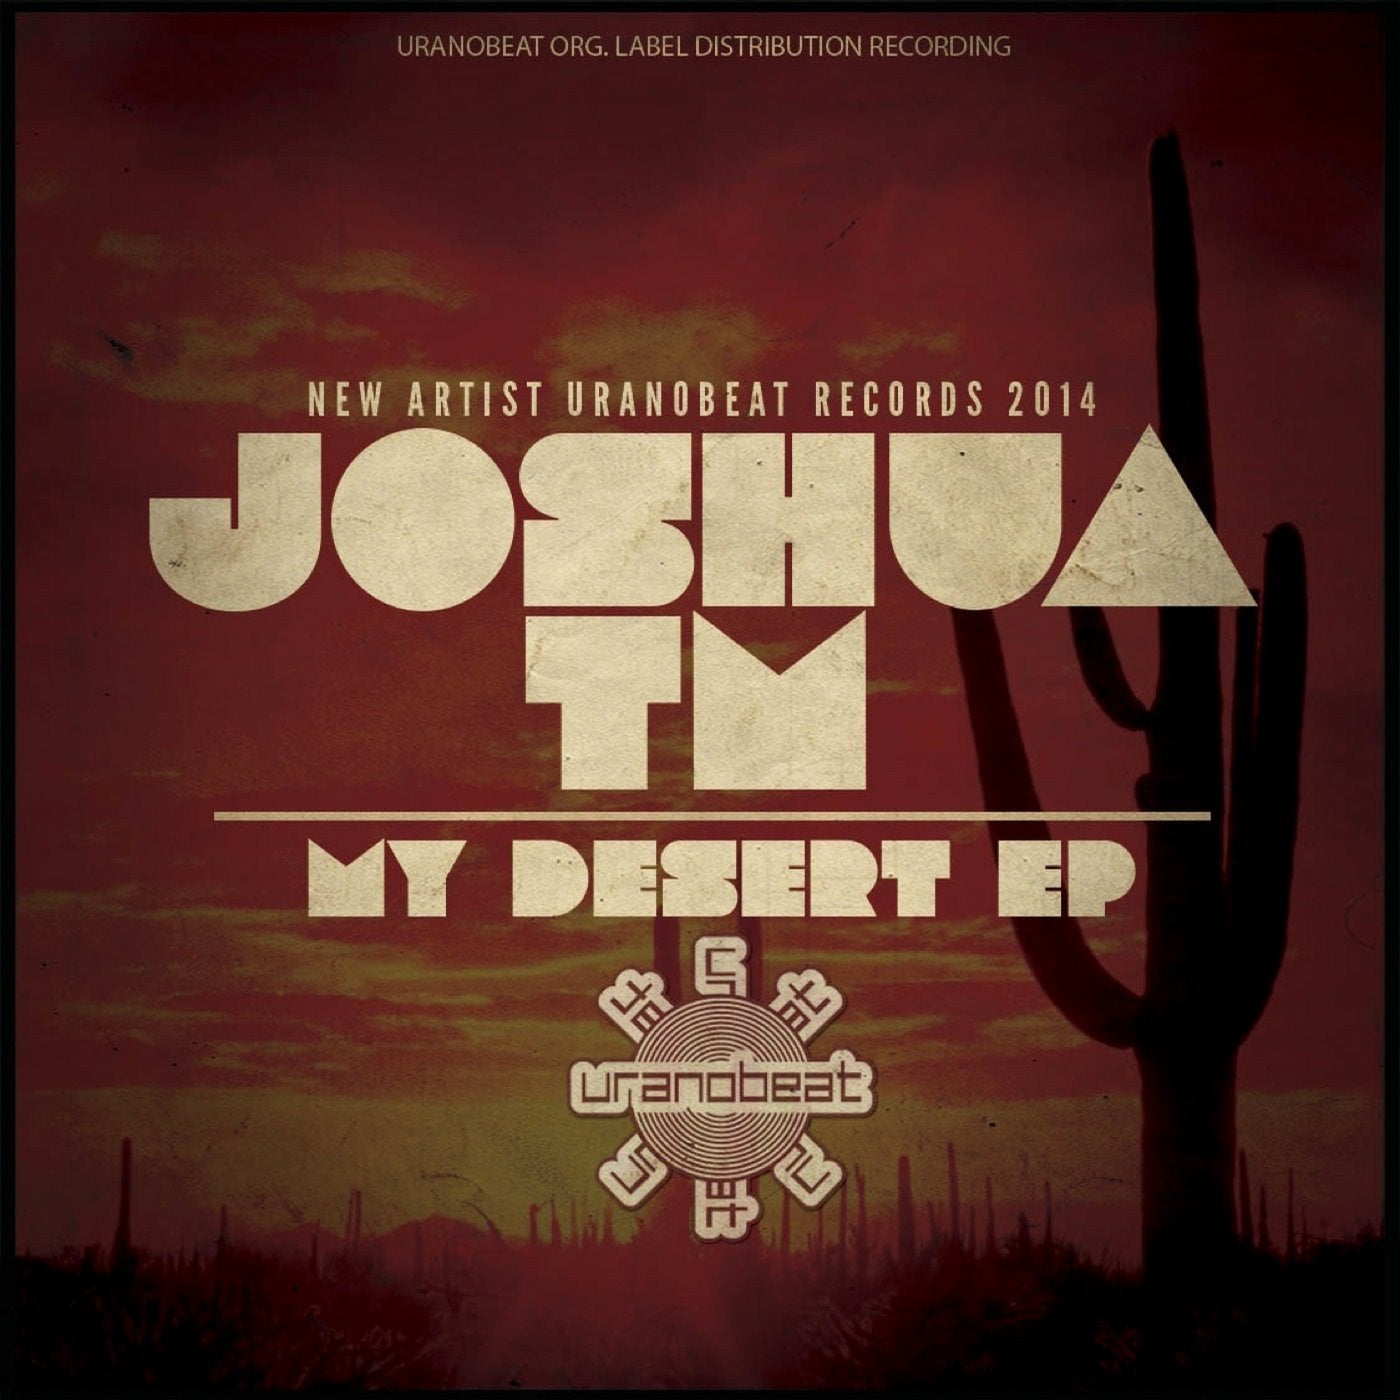 My Desert EP